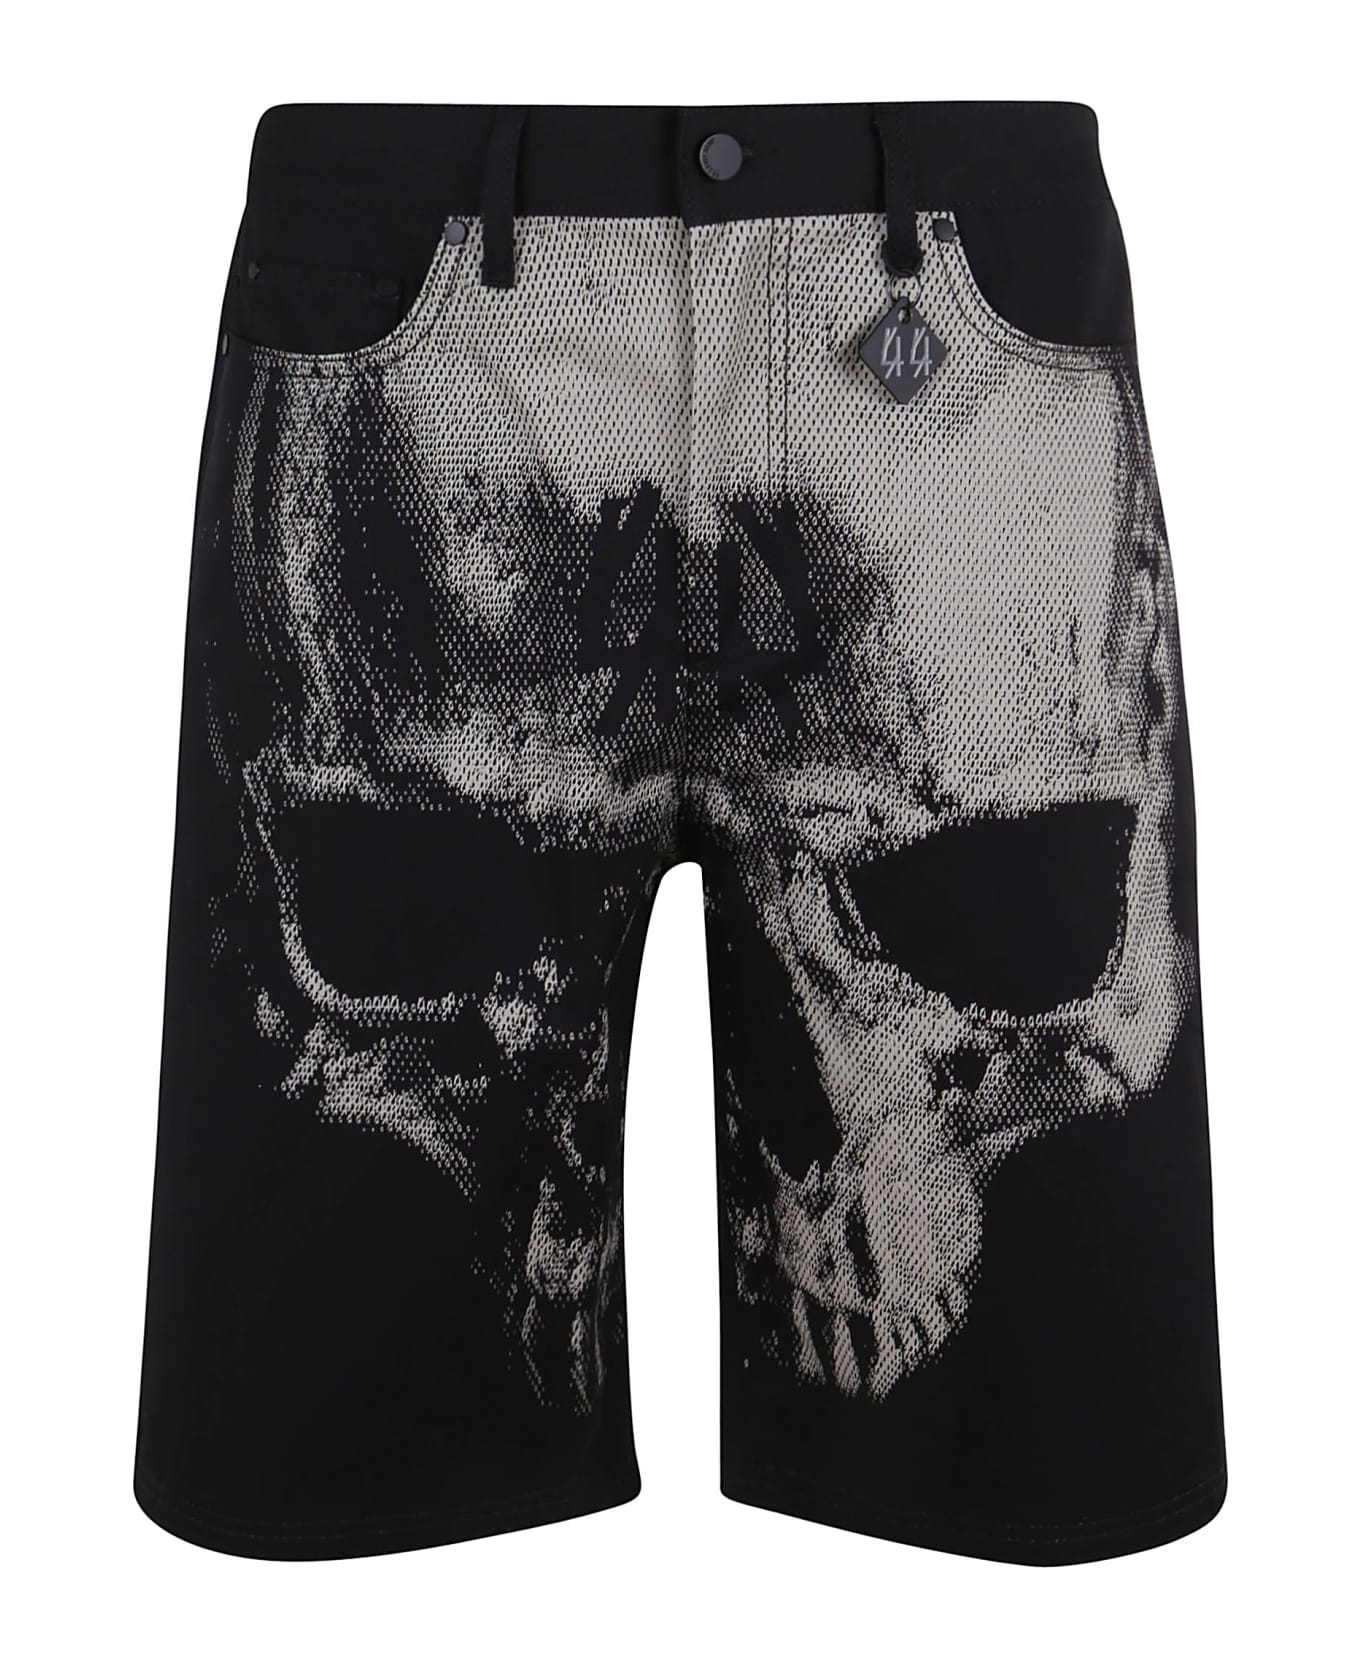 44 Label Group 36 Big Skull Shorts - Big Skull Print Split